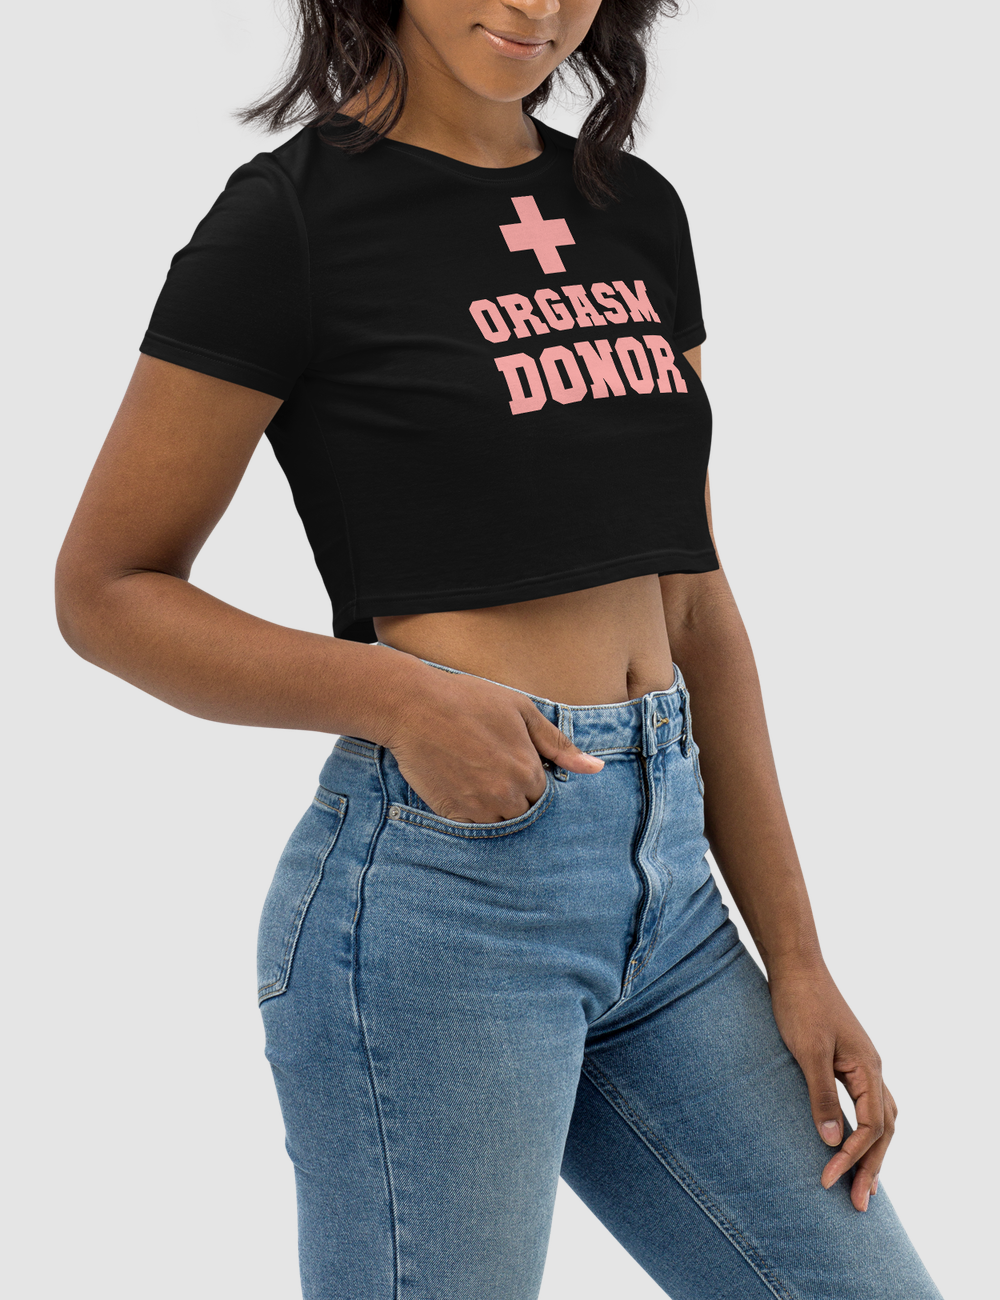 Orgasm Donor | Women's Crop Top T-Shirt OniTakai